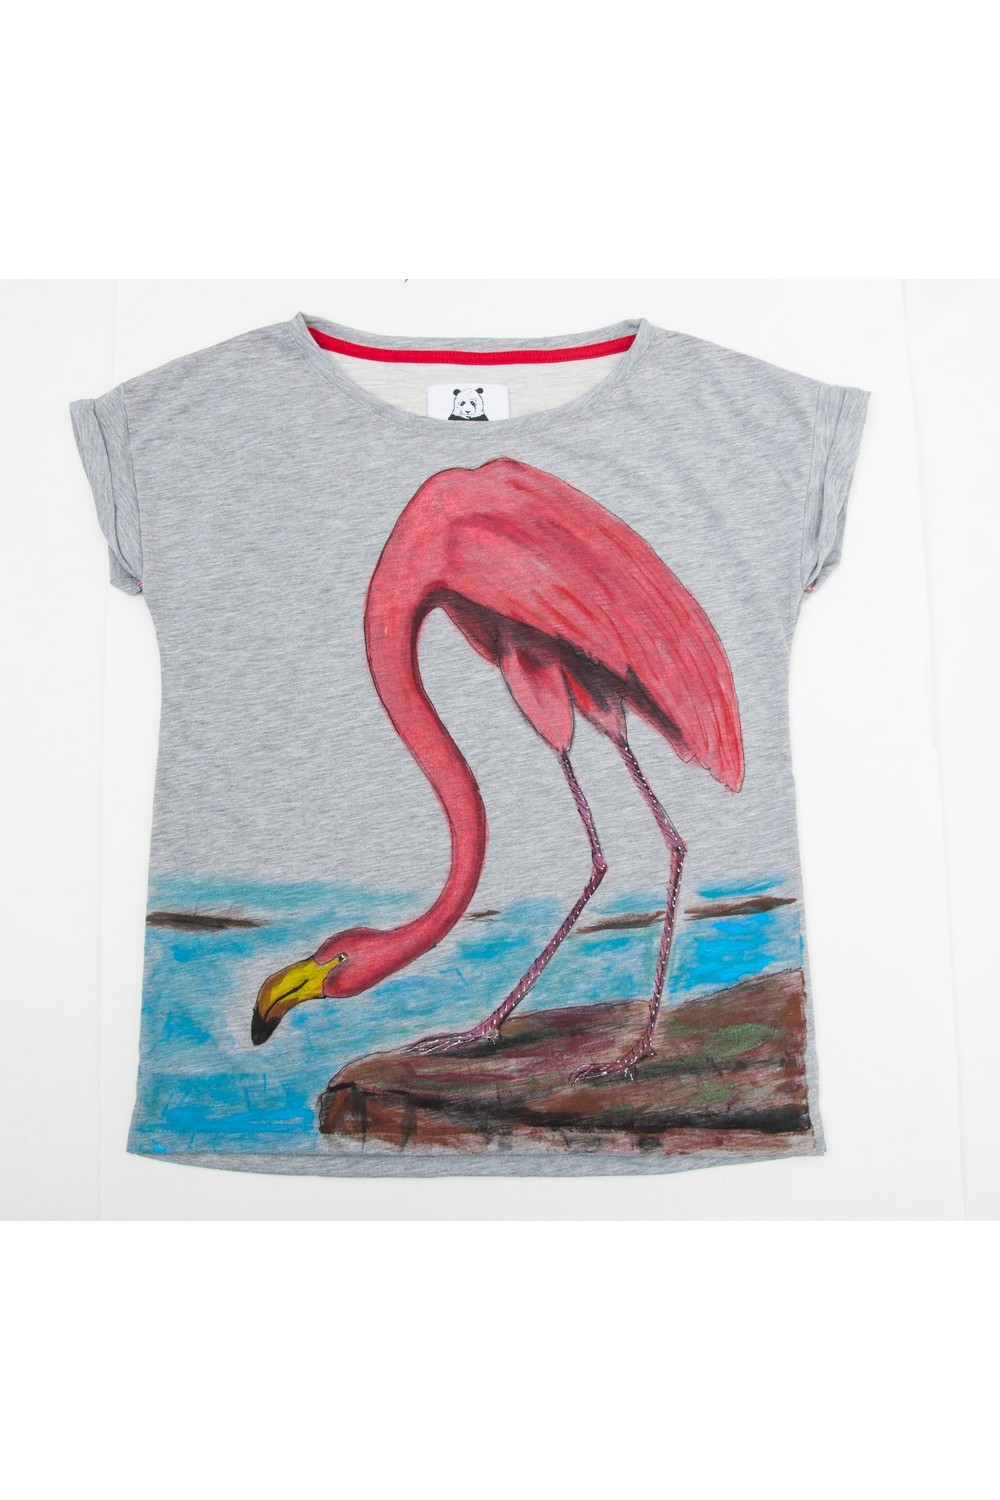 Buy Yoga gym Women Grey Cotton Print tee shirt , Sleeveless Flamingo tshirt, Unique stylish t shirt